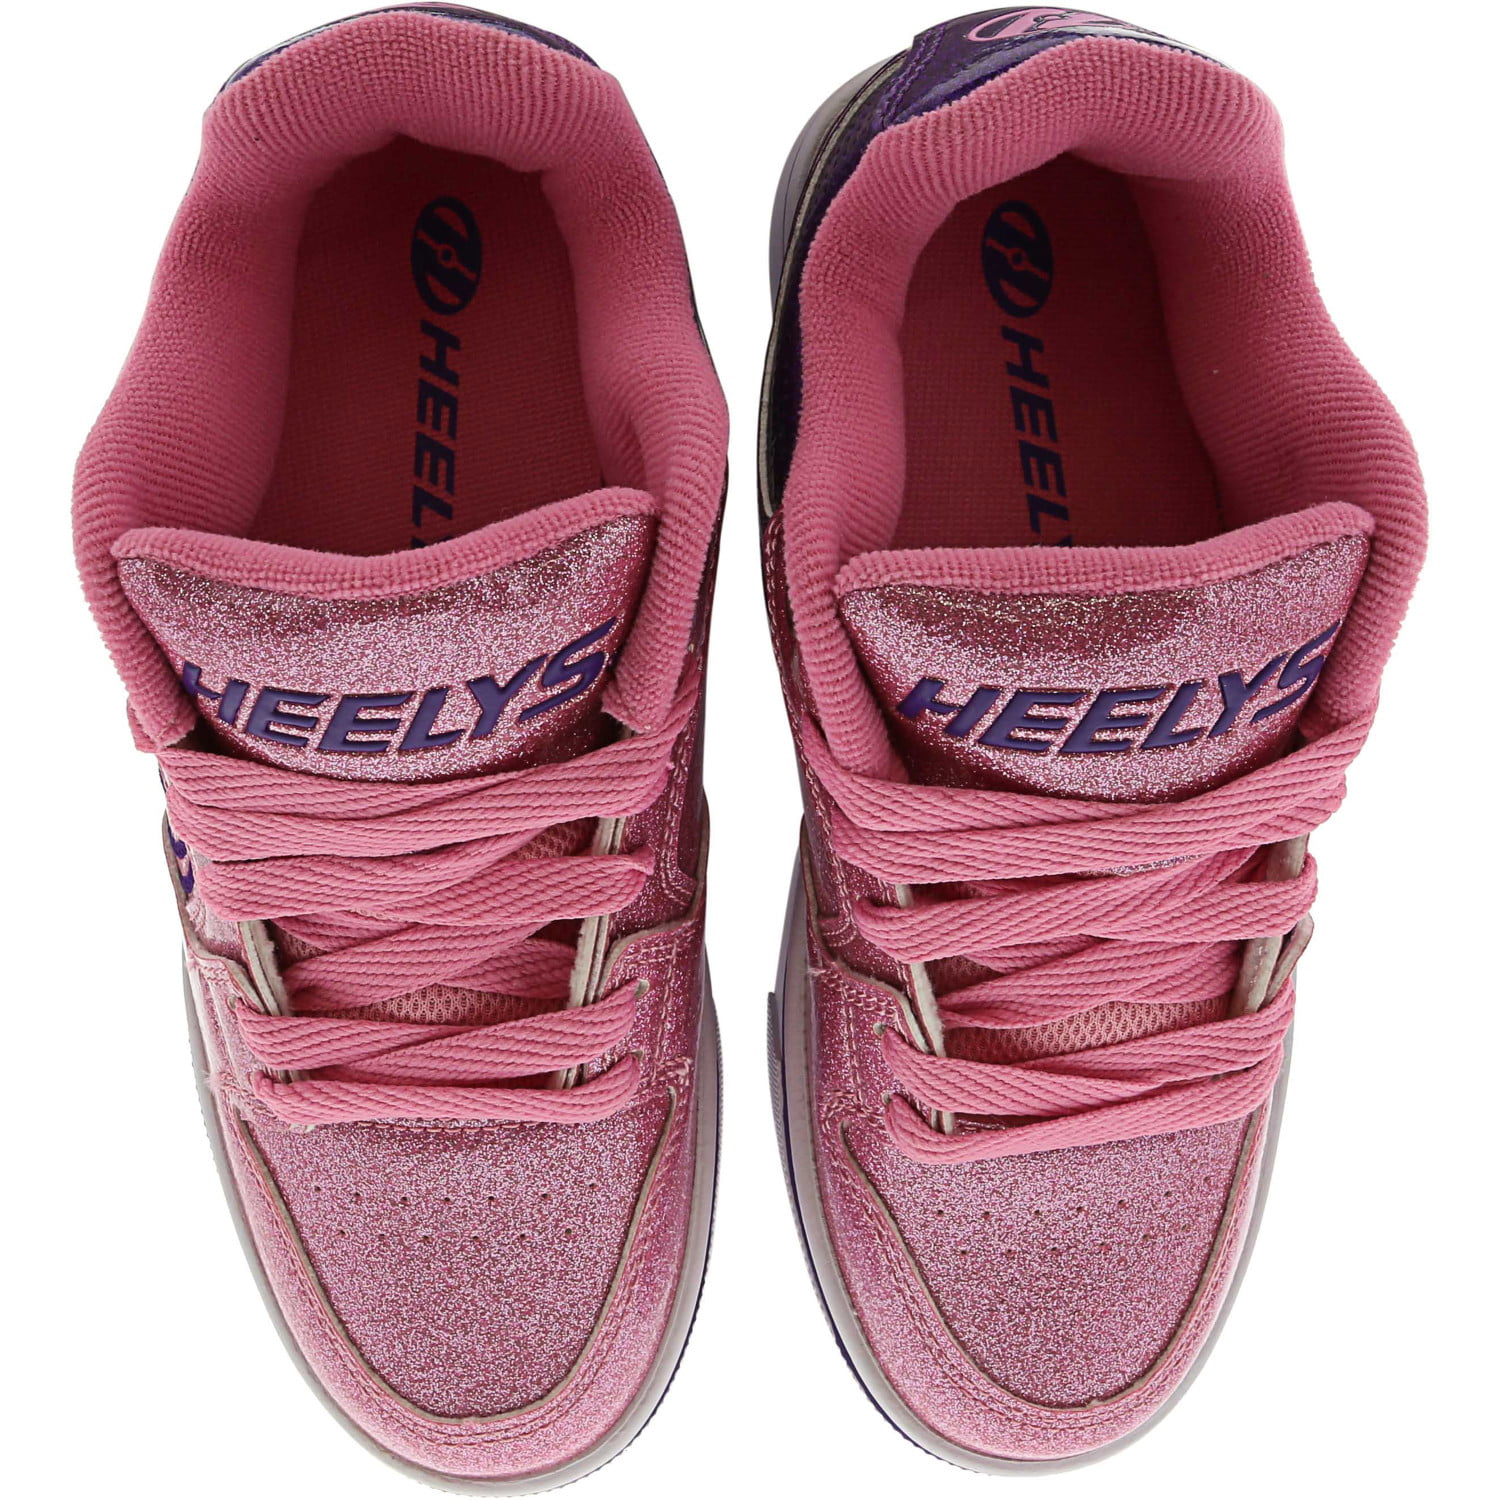 heelys motion plus pink glitter